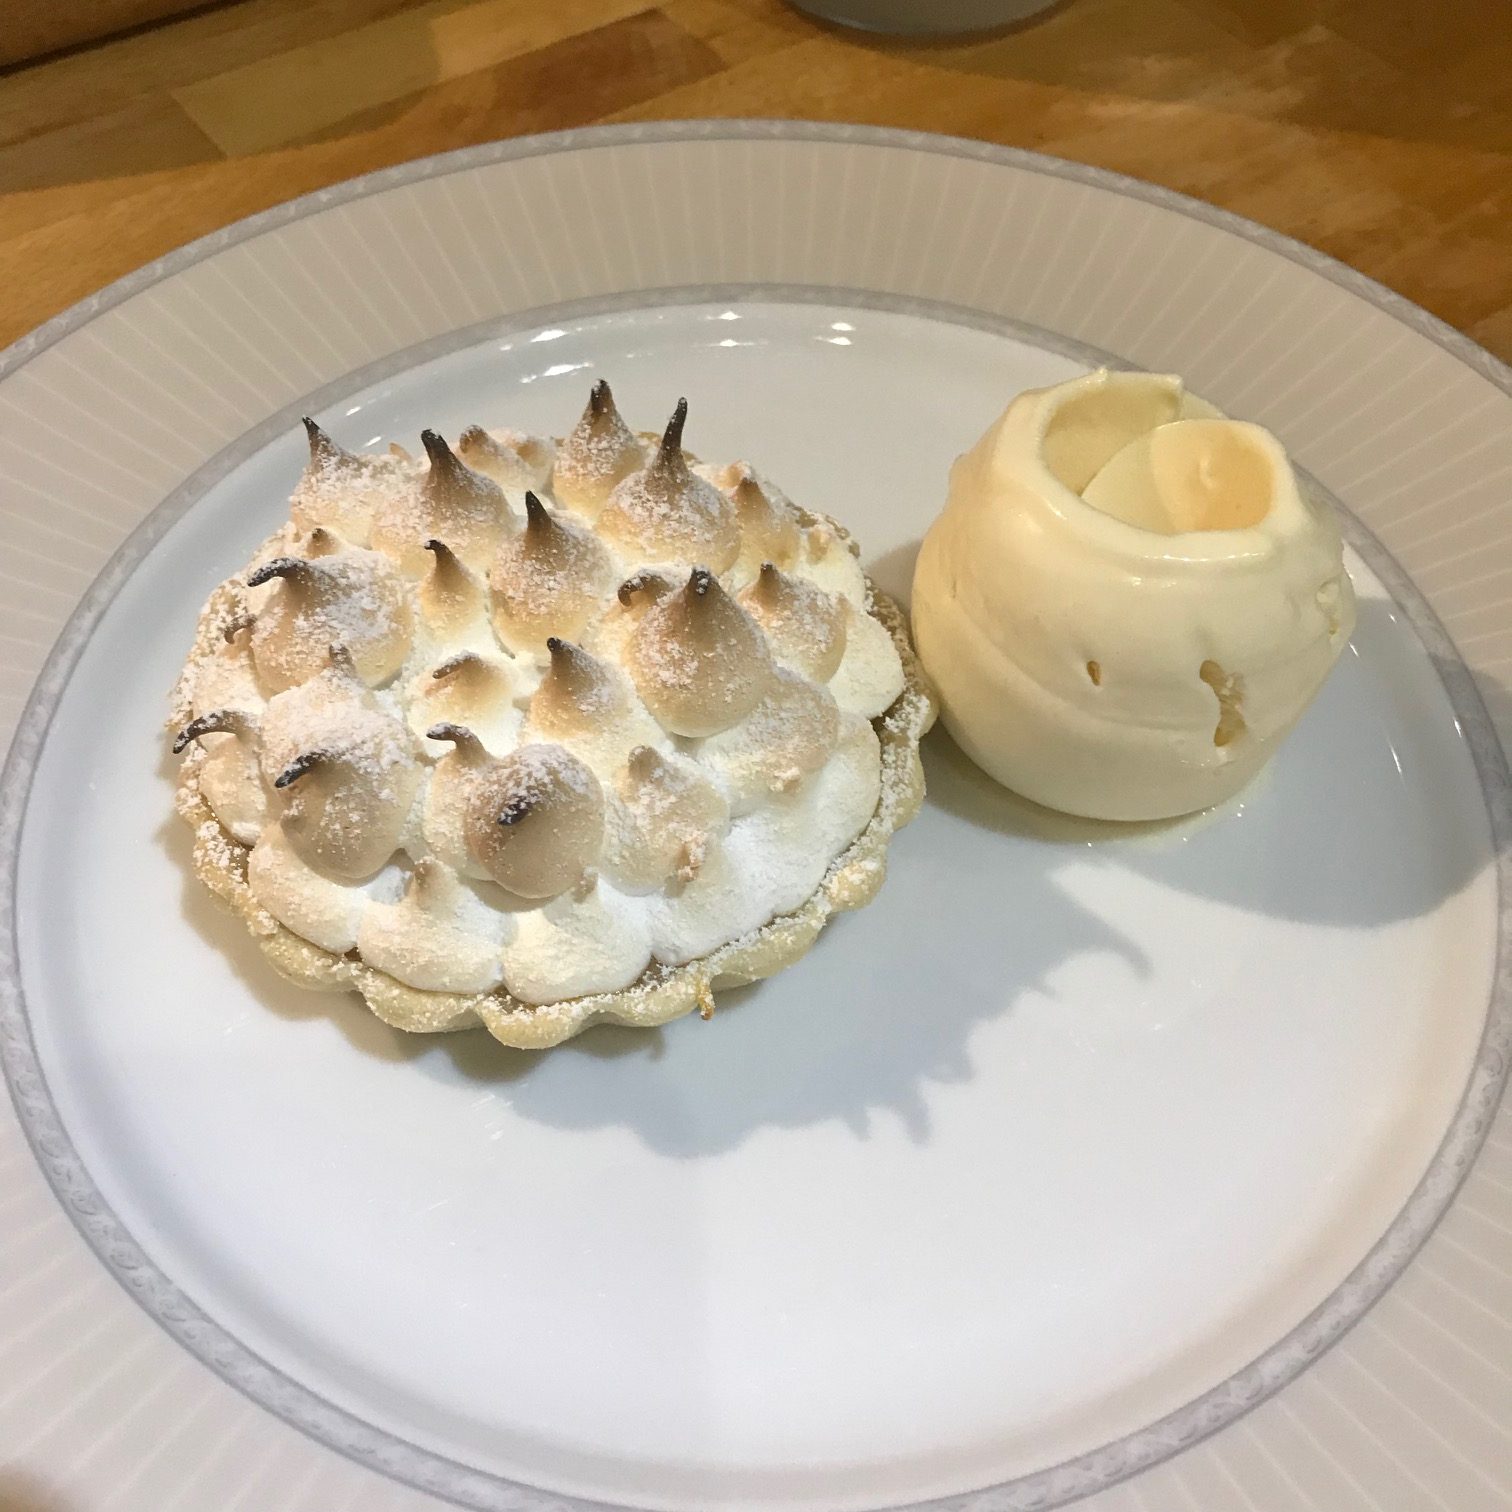 20190910 - Lemon Meringue Pie with Lemon Curd Ice Cream